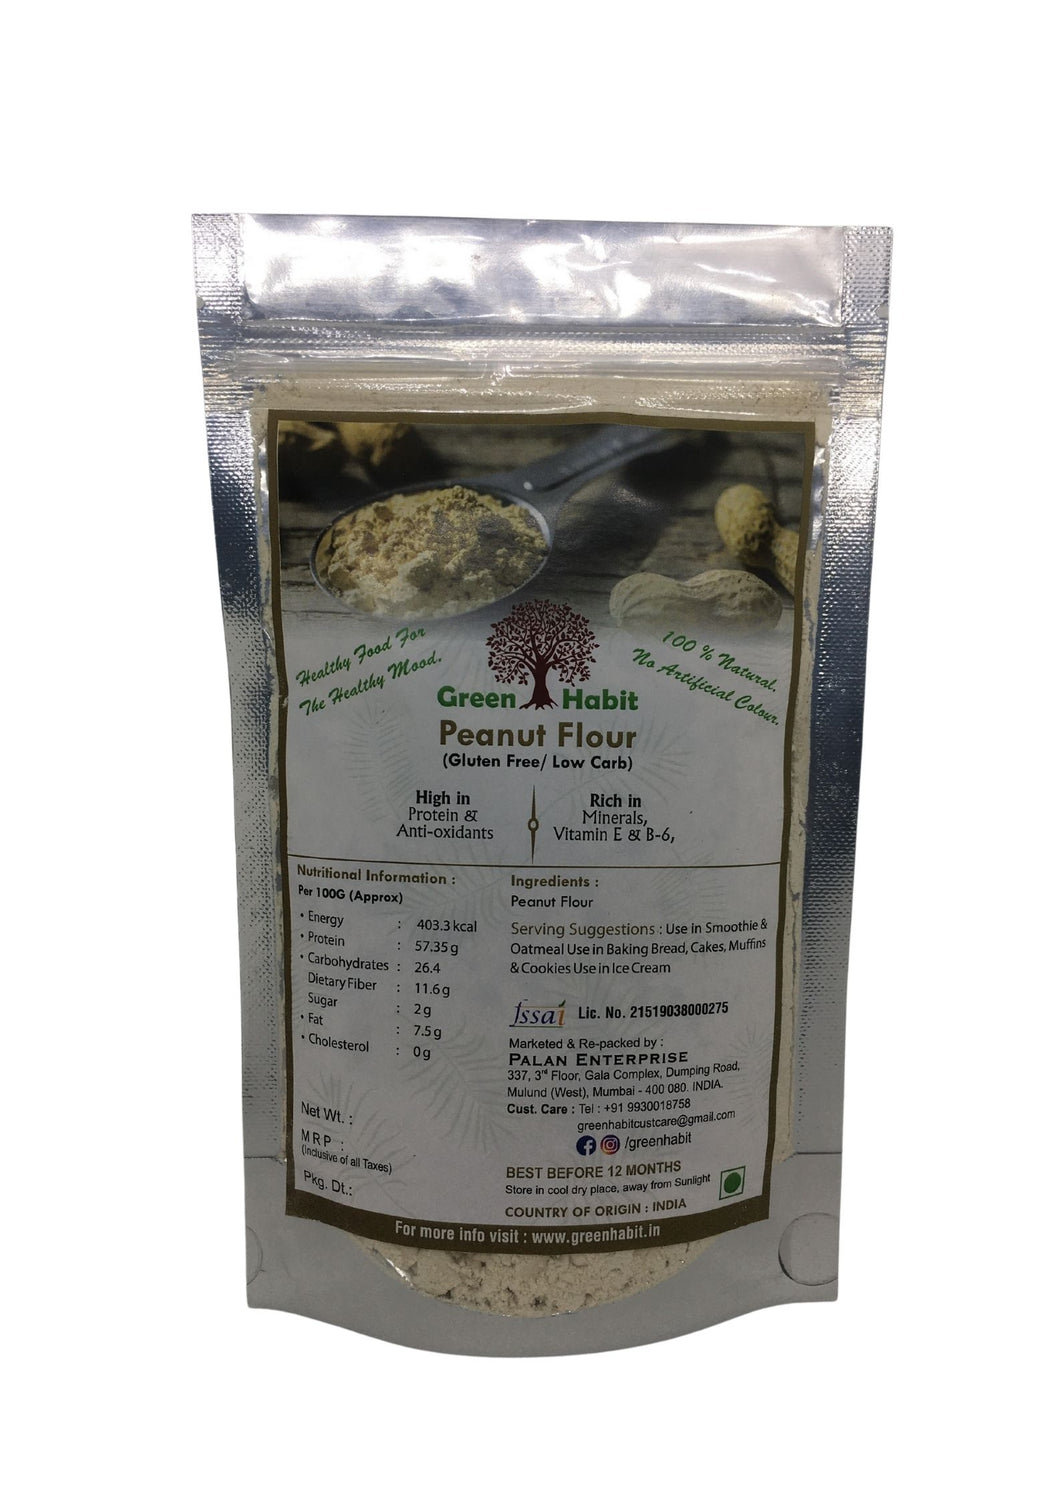 Green Habit Peanut Flour All Natural | Vegan | Gluten Free Ingredients | NON-GMO | Indian Origin - Green Habit